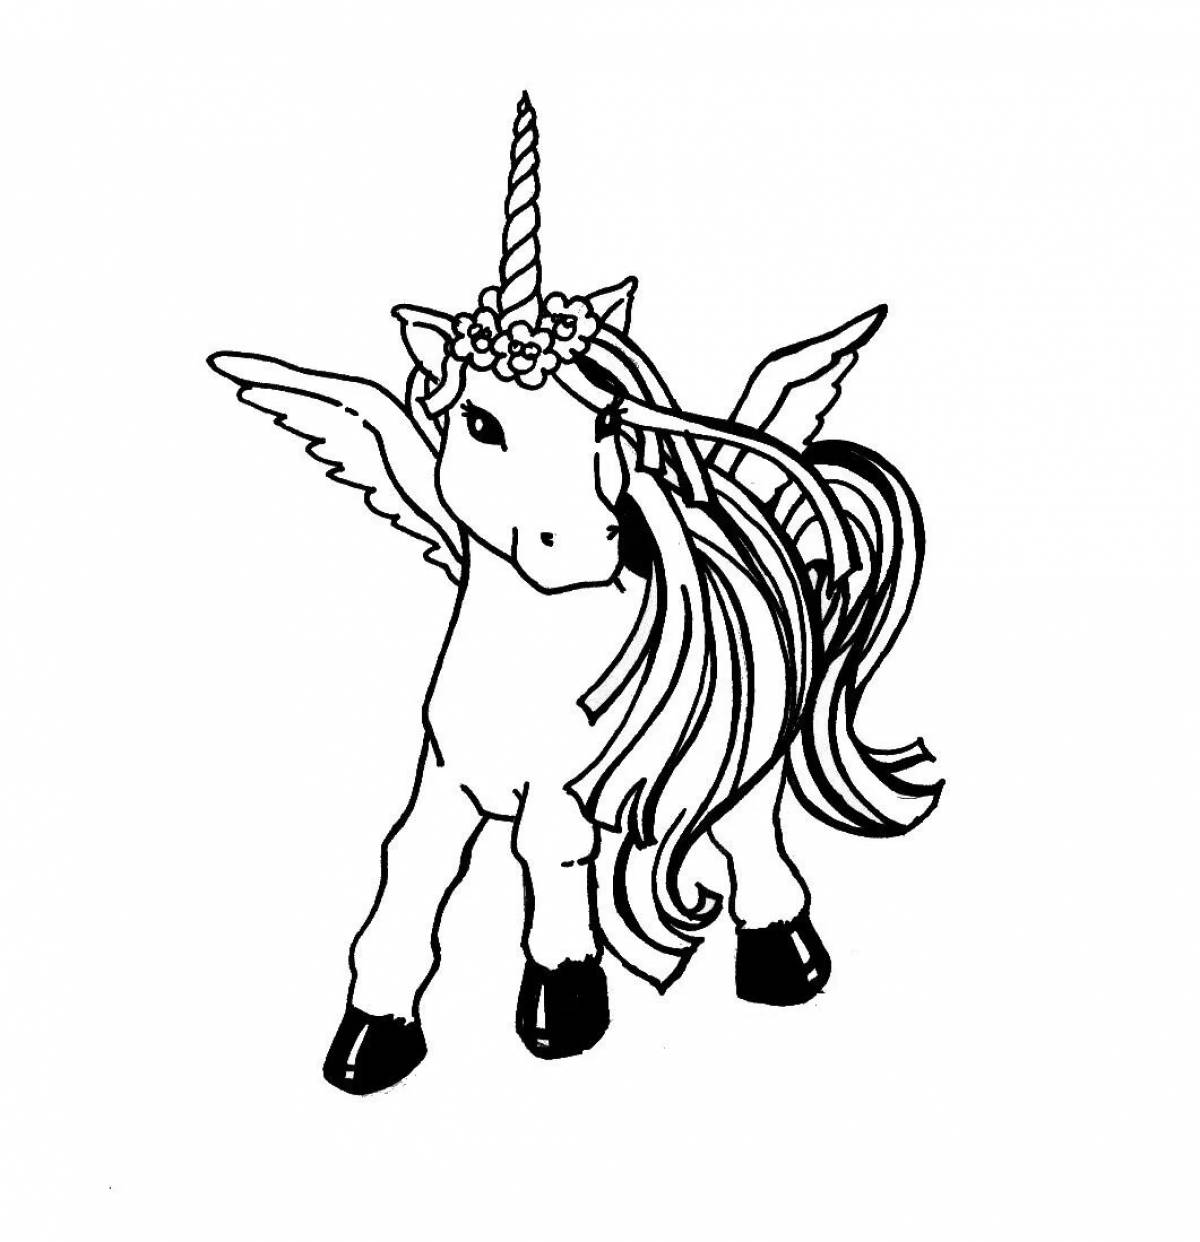 Turn on the unicorns #11